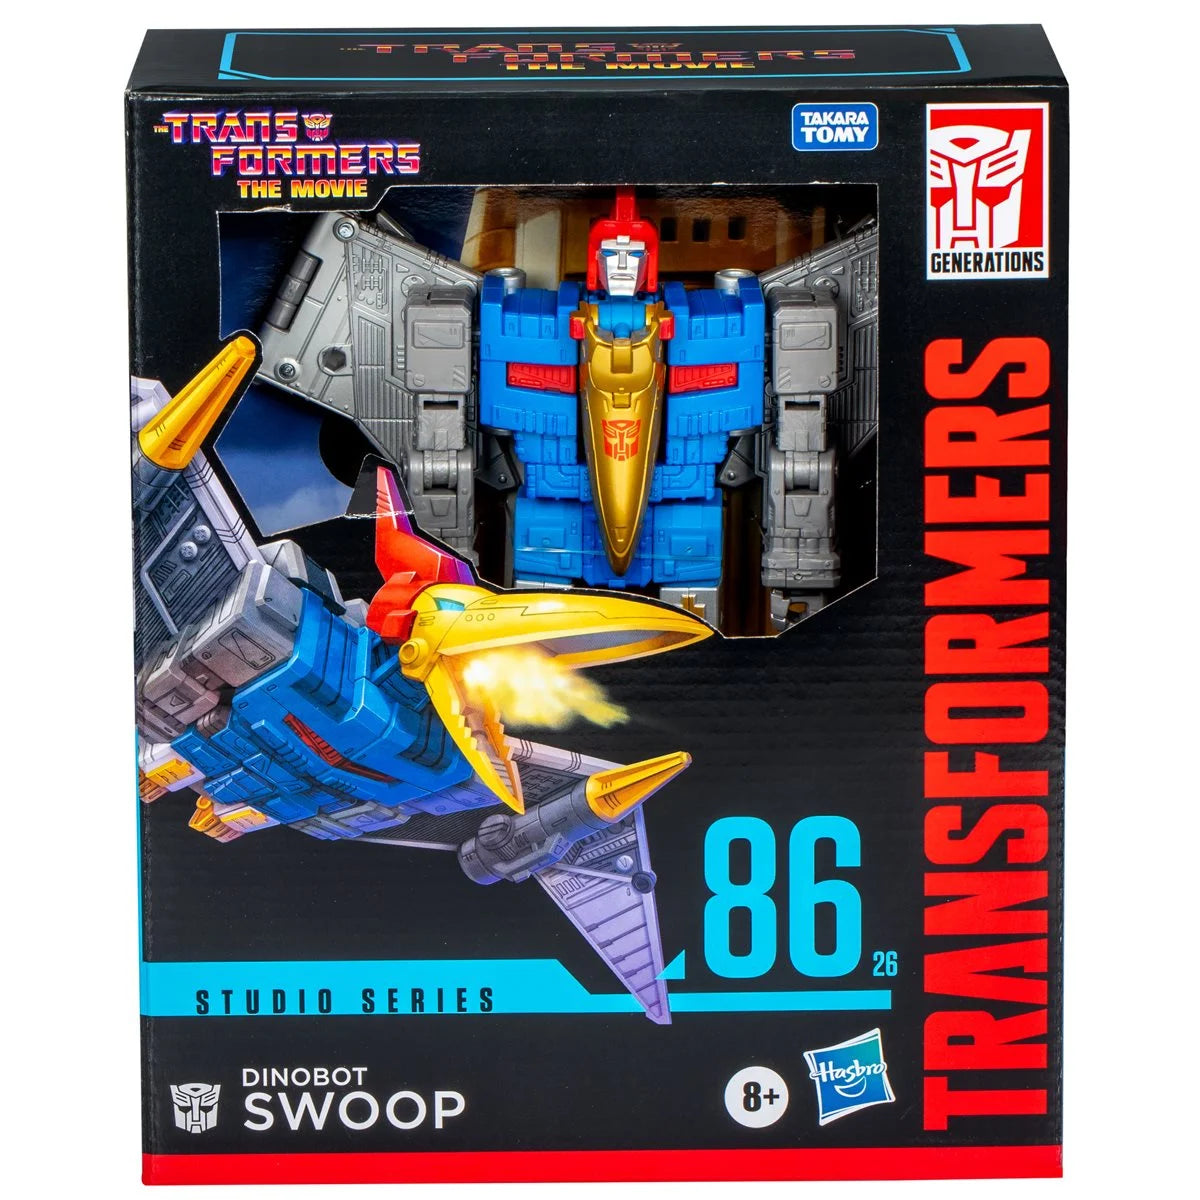 Transformers Studio Series 86 Leader Dinobot Swoop front of the box